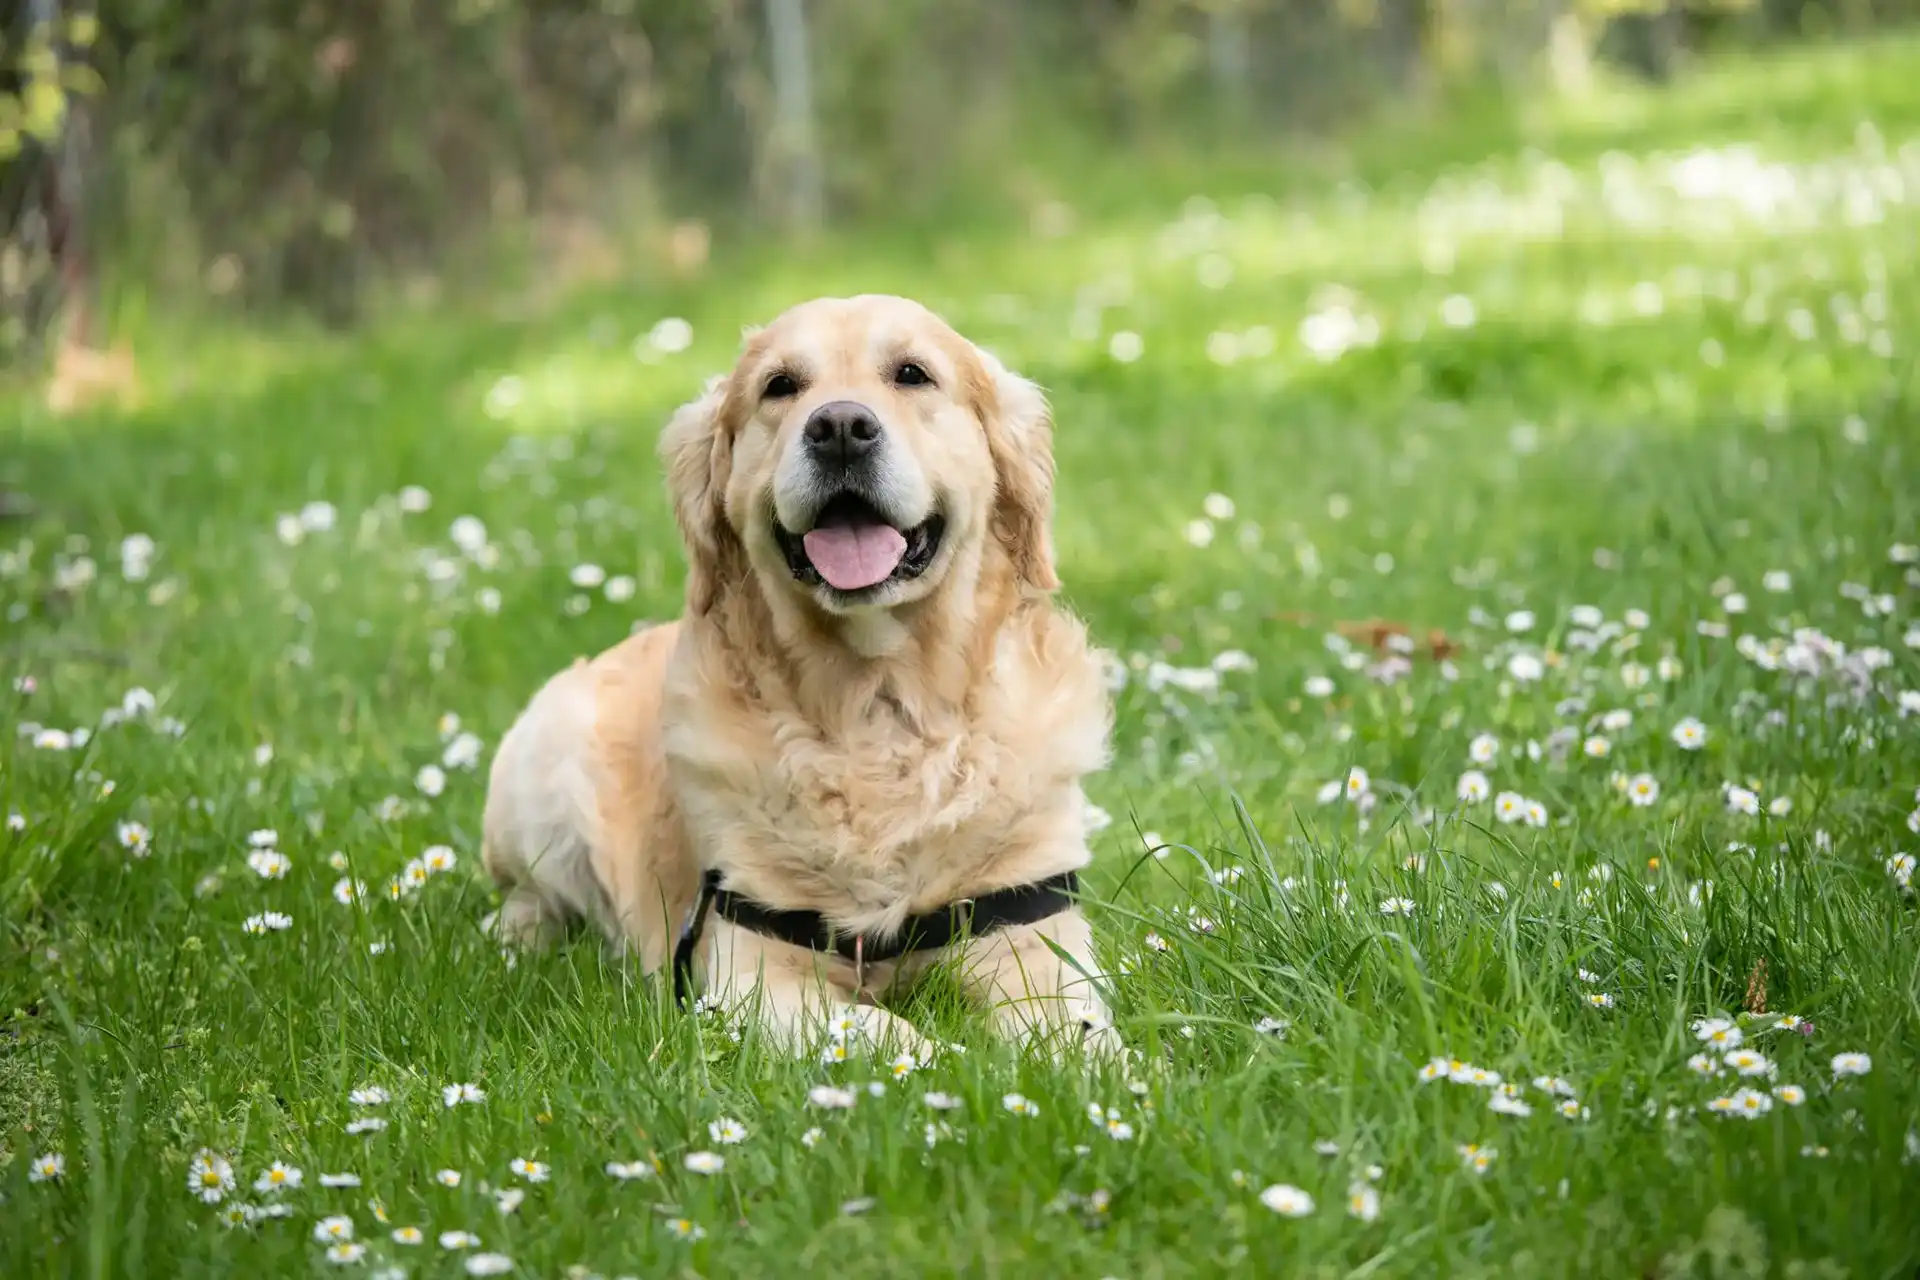 Dog in a field of flowers